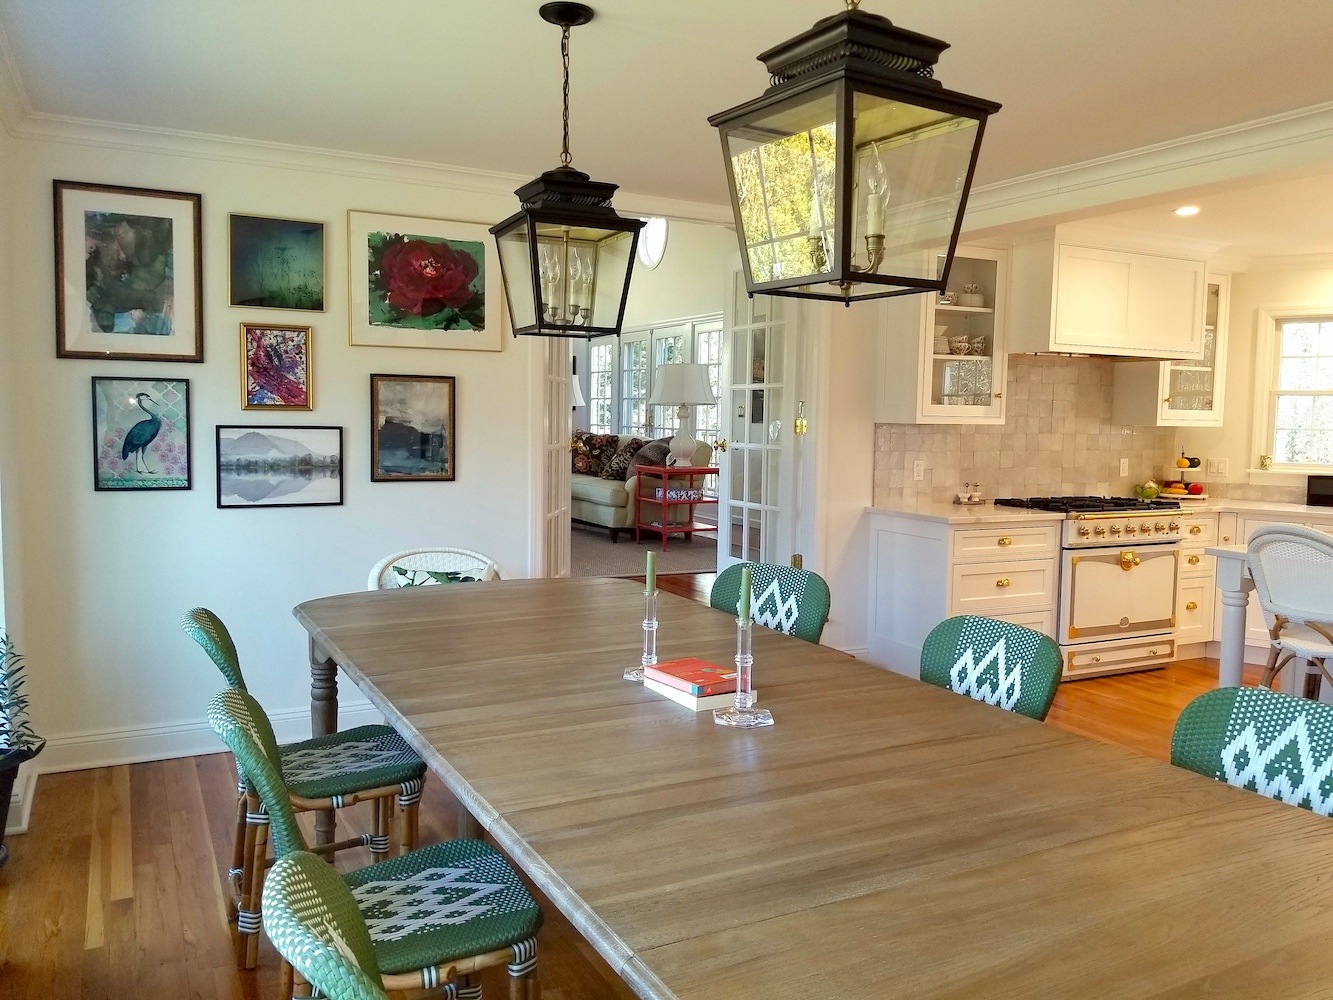 Virtual Kitchen Design - Benjamin Moore - Simply White - art wall - party room - table - Wisteria - lanterns - Ballard Designs